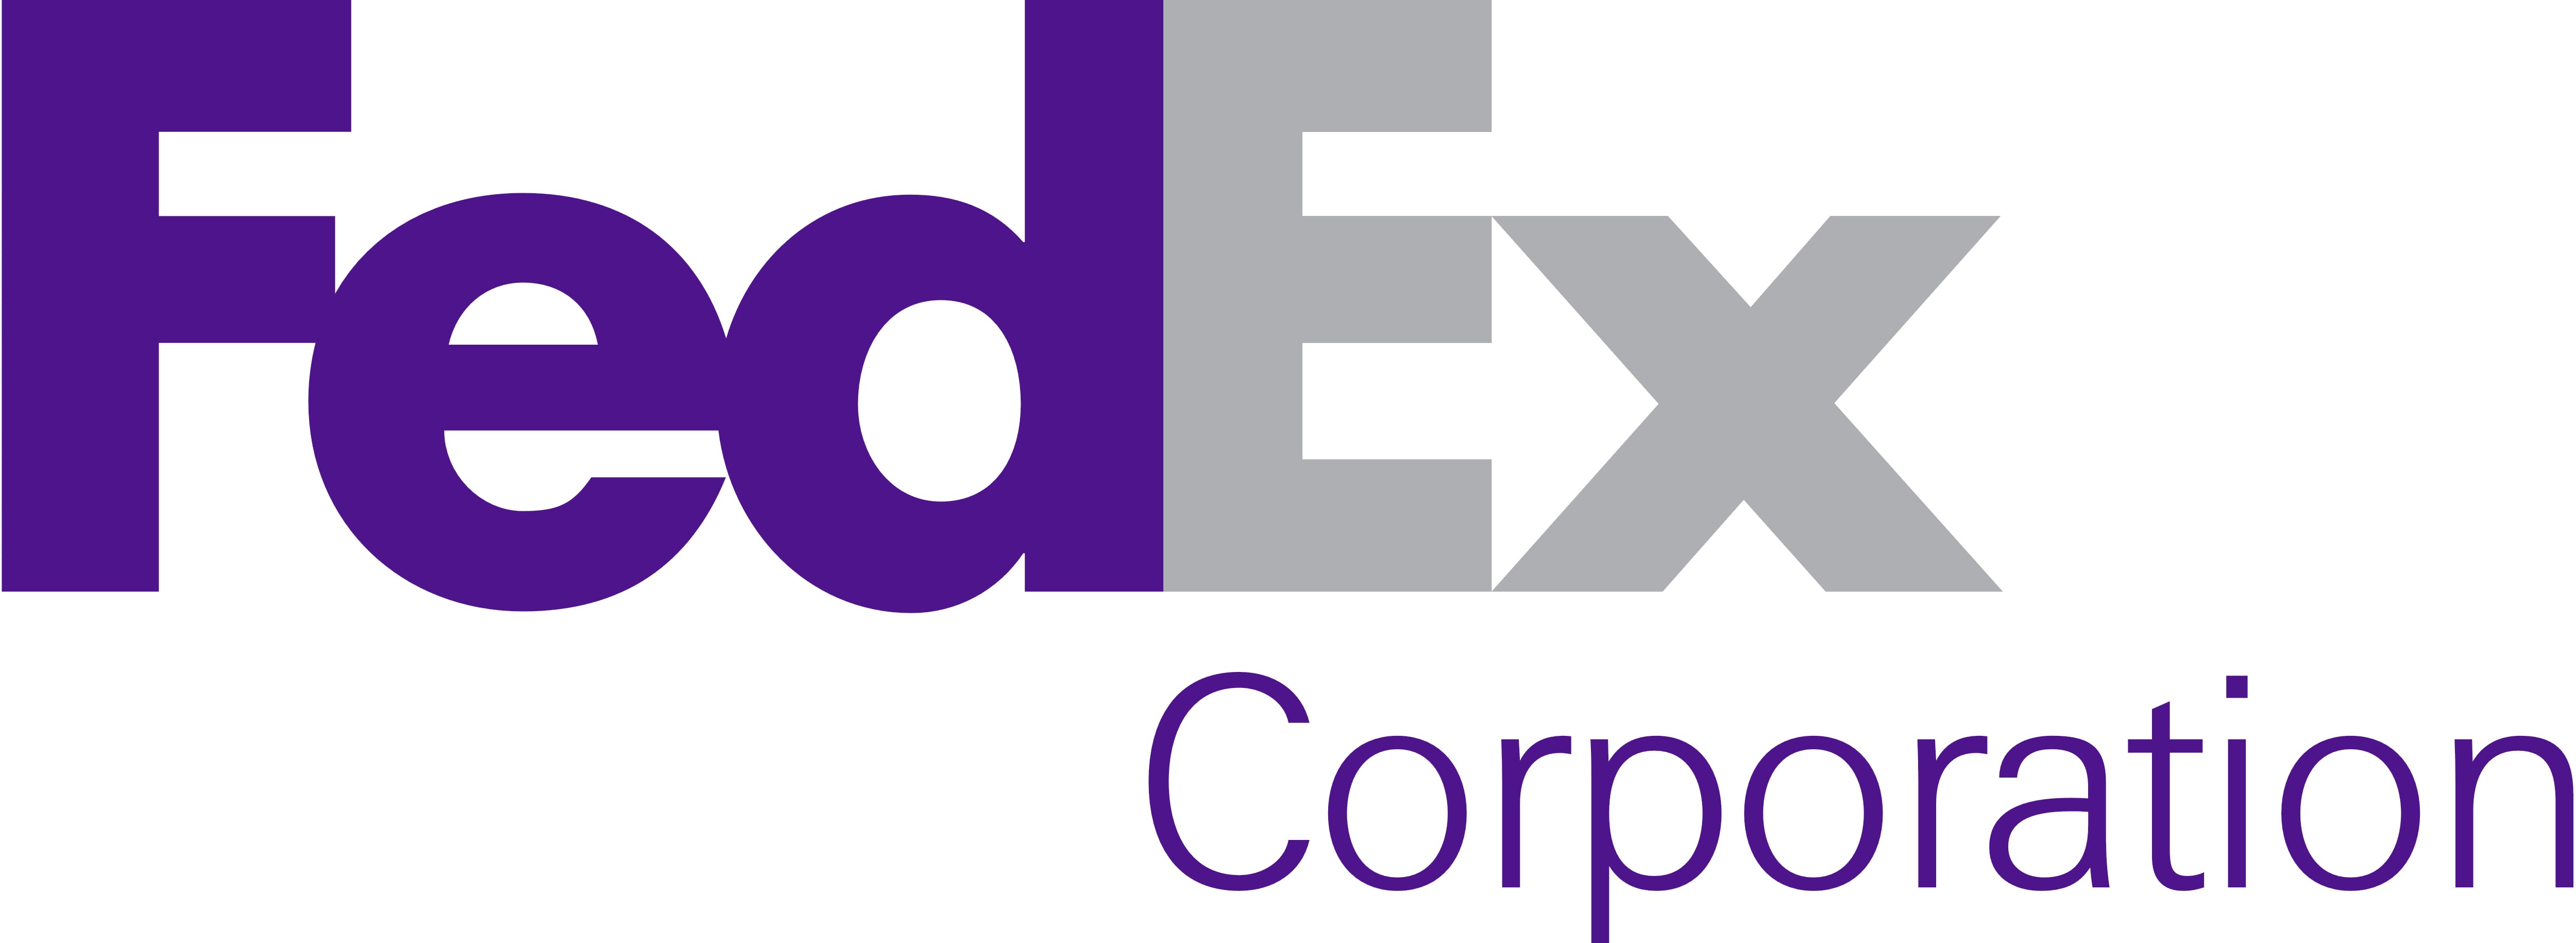 FedEx Loogo Logo - fedex logo png 8 | PNG Image